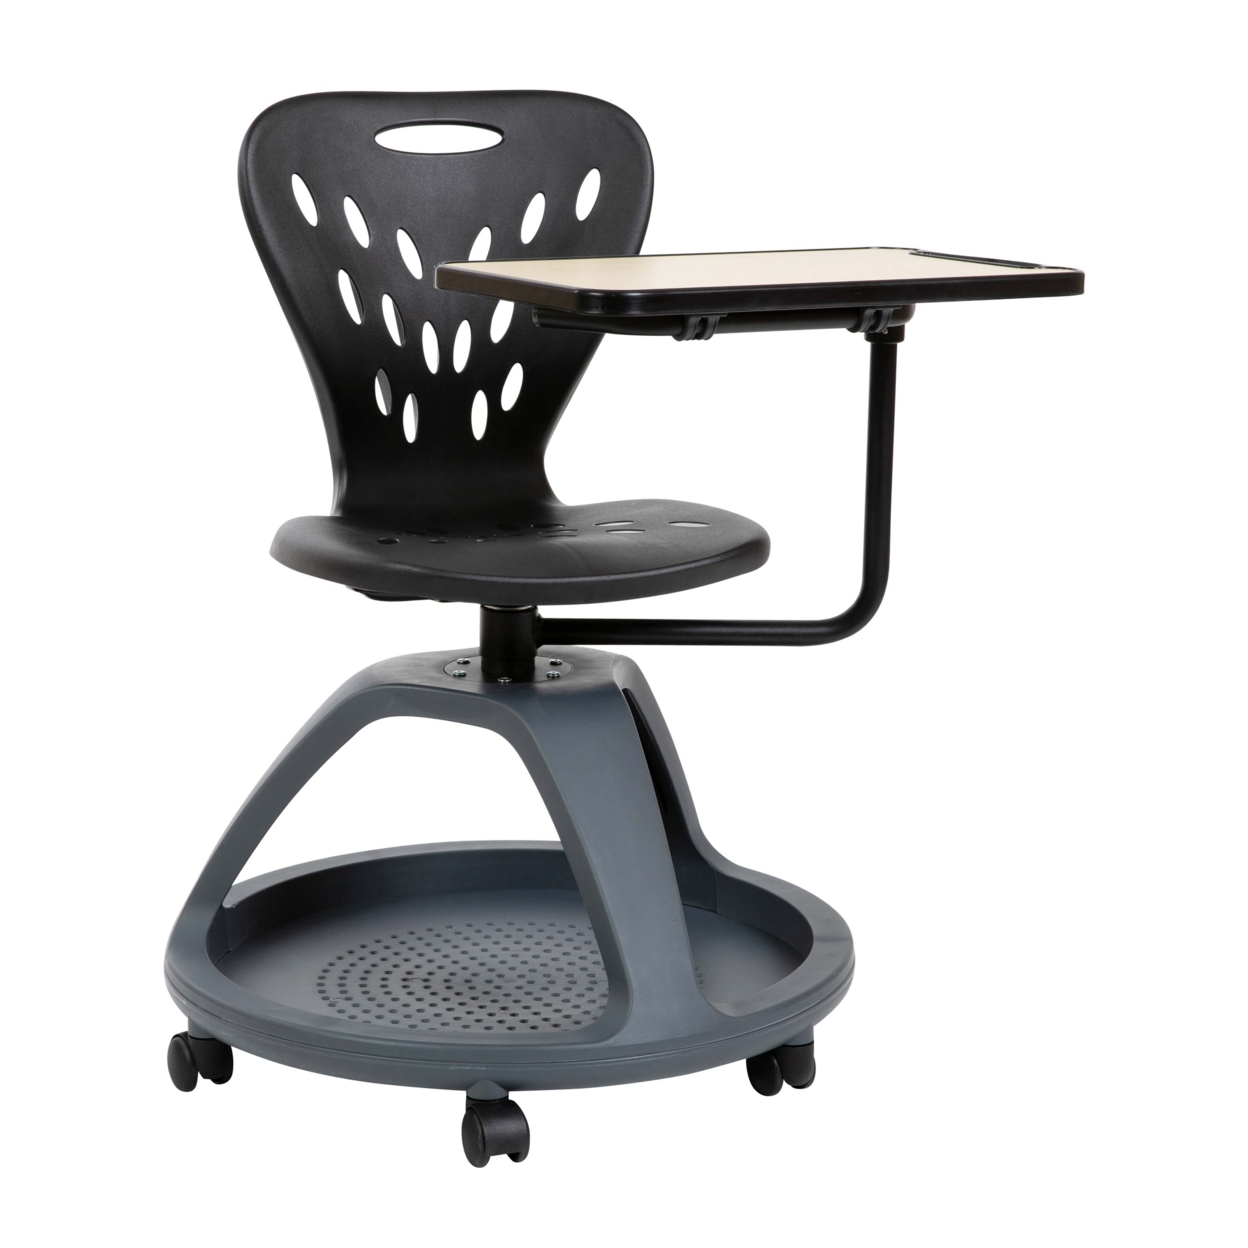 Mobile Desk Chair - Black